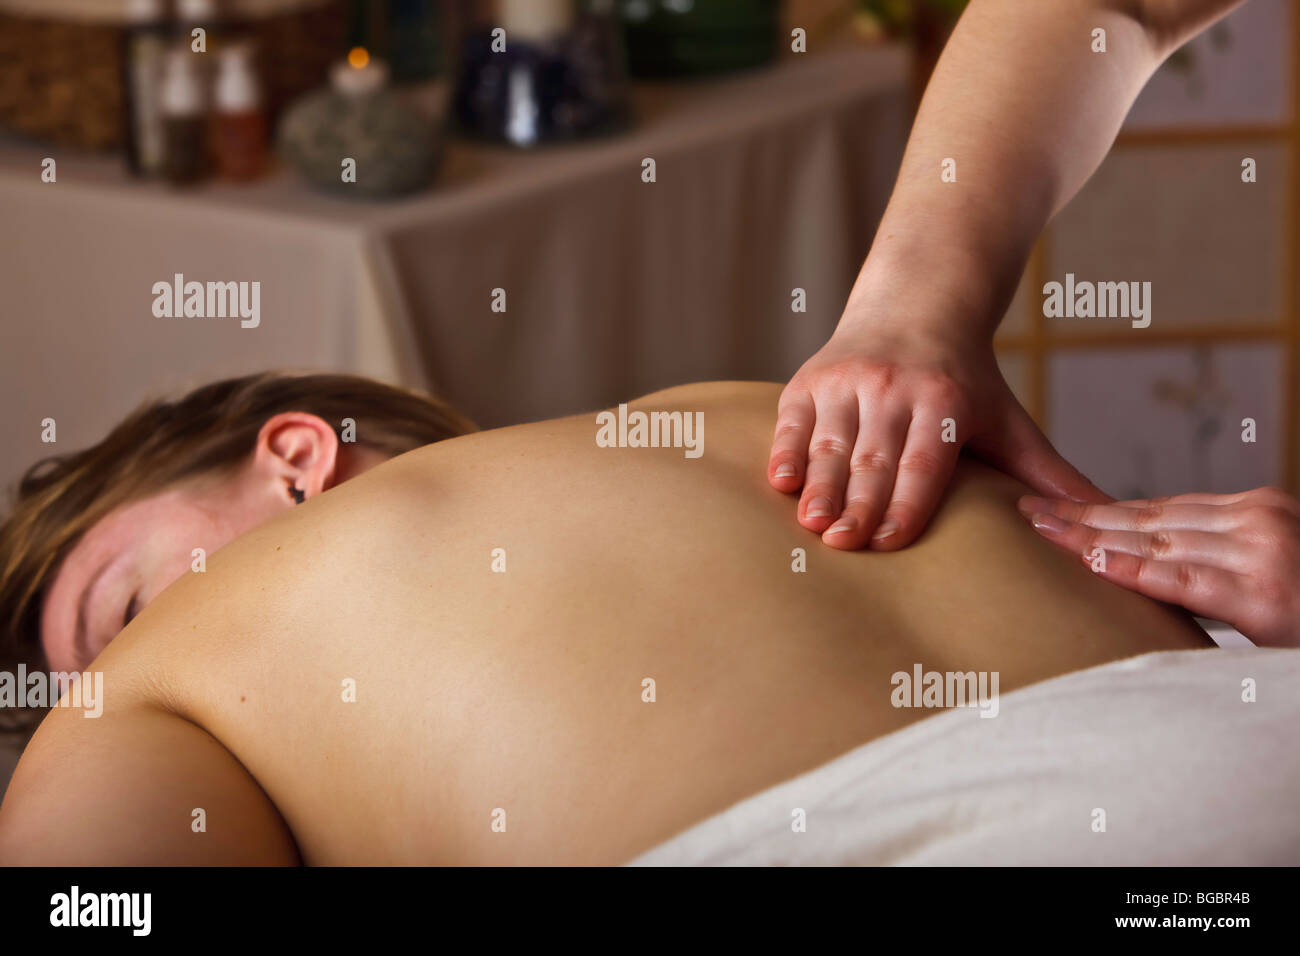 Woman lying down enjoying a relaxing back massage by a masseuse. Stock Photo